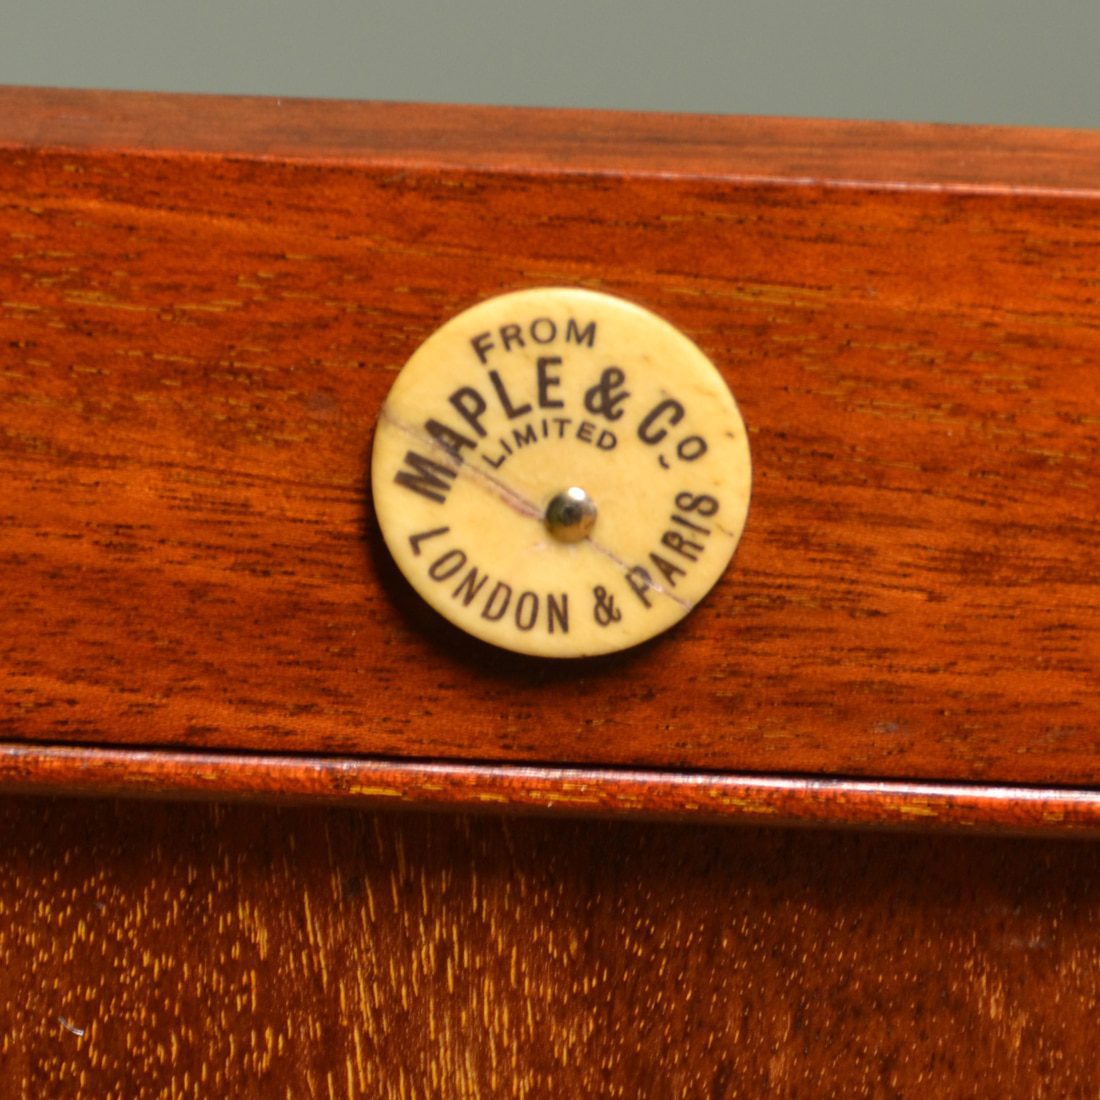 Spectacular Quality Maple & Co Edwardian Antique Music Cabinet